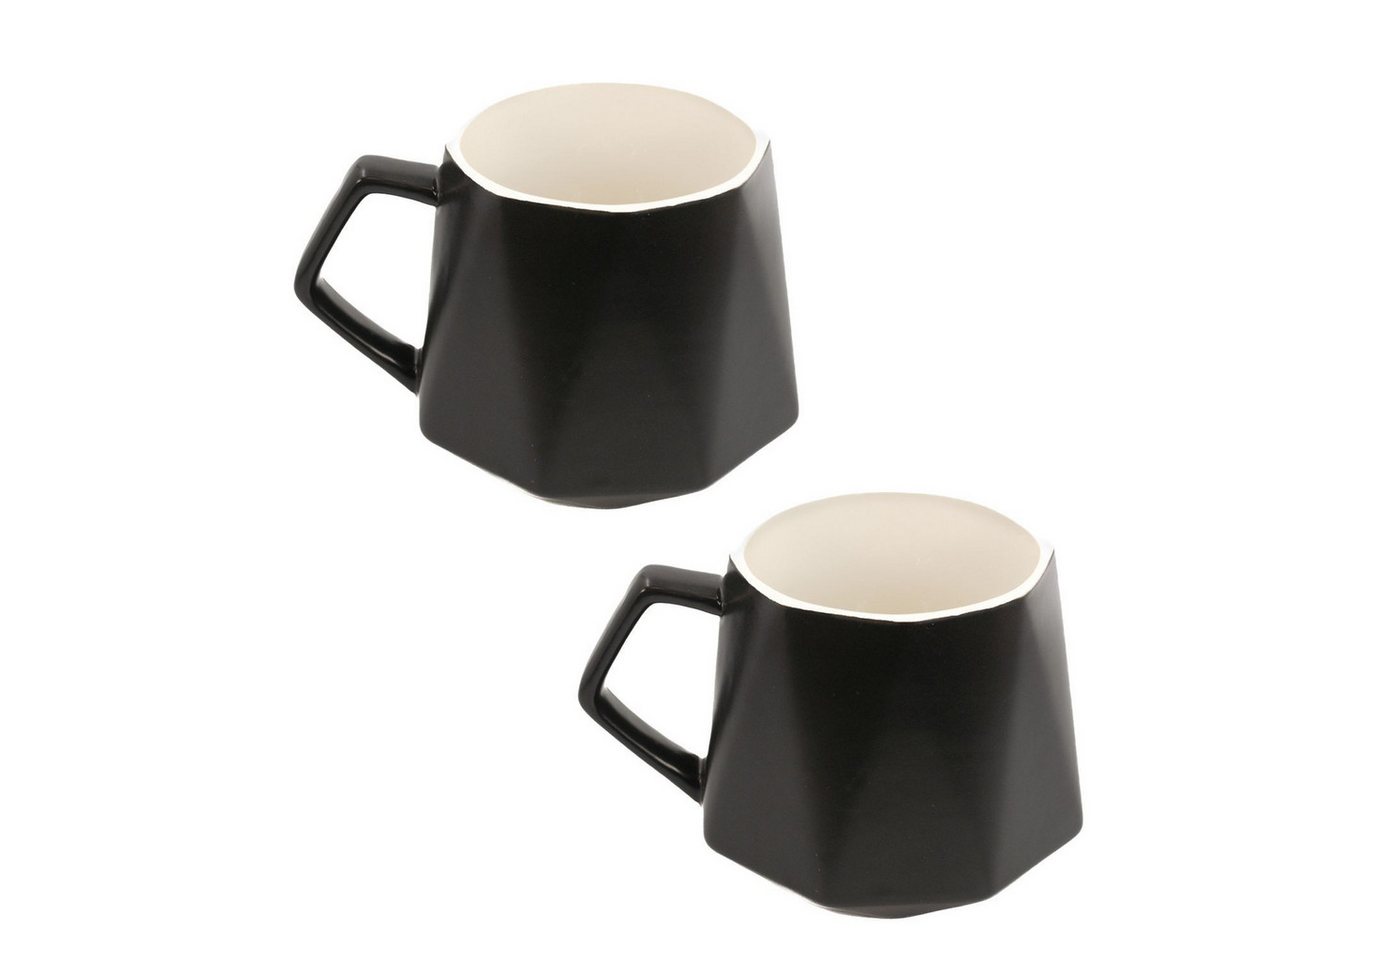 Intirilife Tasse, Keramik, Kaffee Tee Tasse in Feinschliff Optik 350 ml - 13 x 10.5 x 9.2 cm von Intirilife